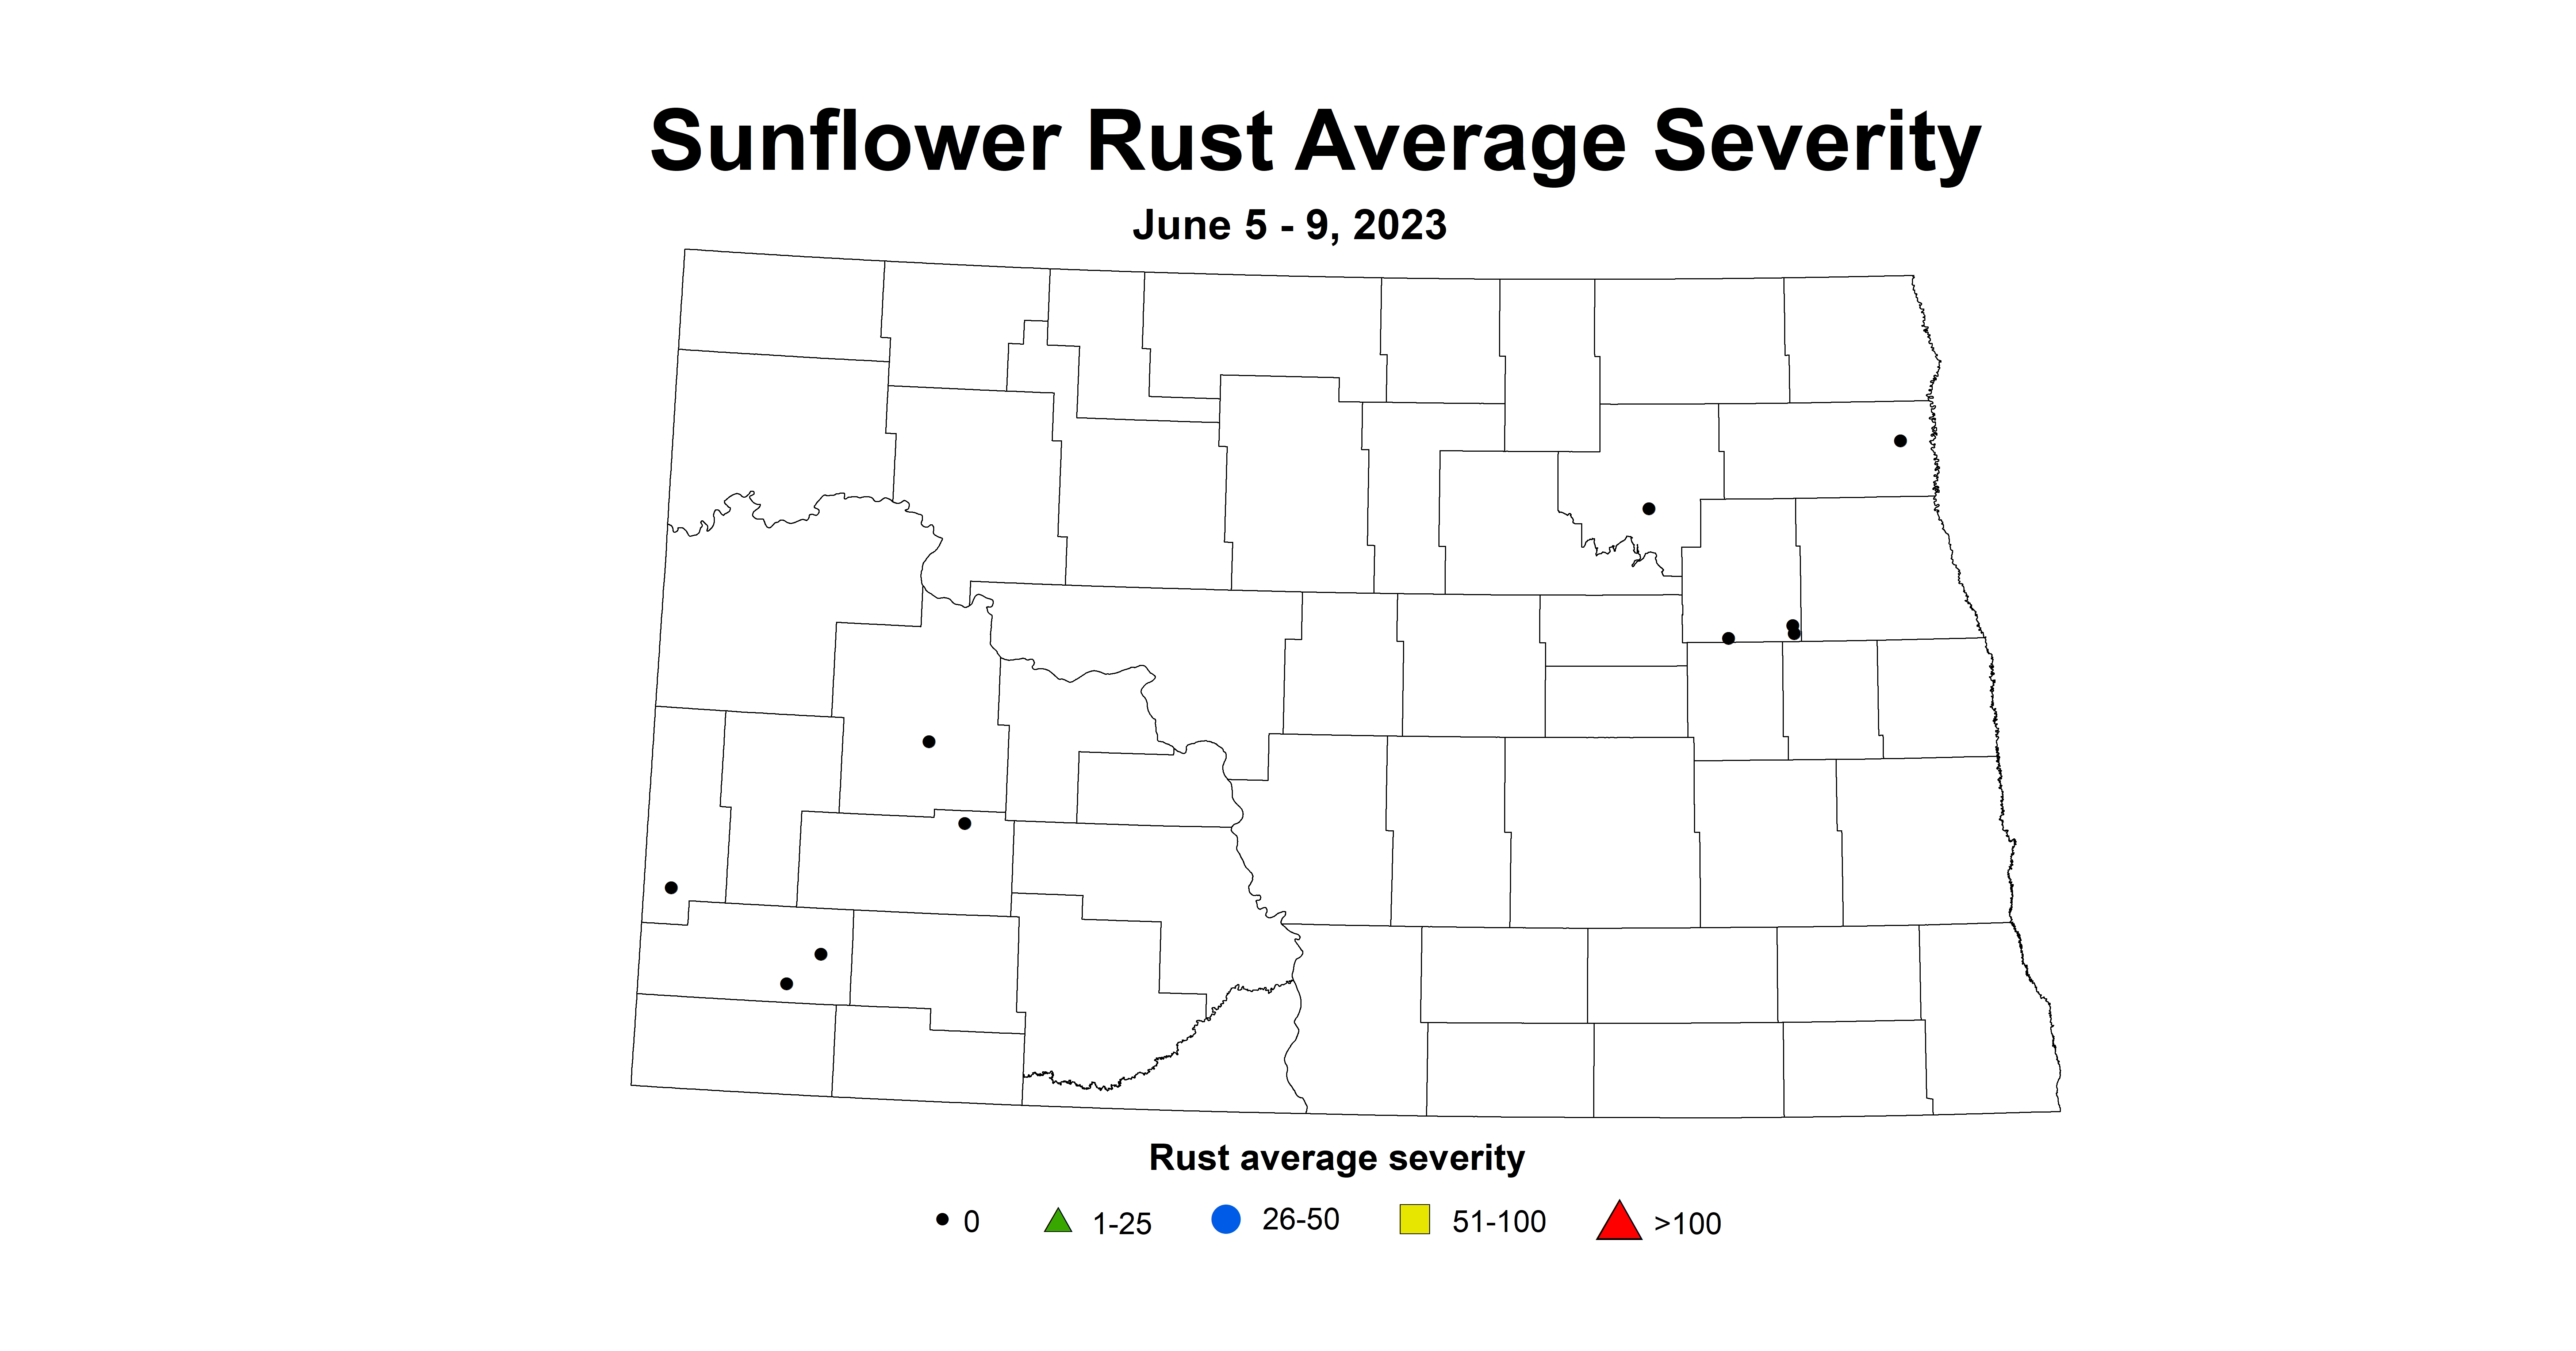 sunflower rust average severity June 5-9 2023